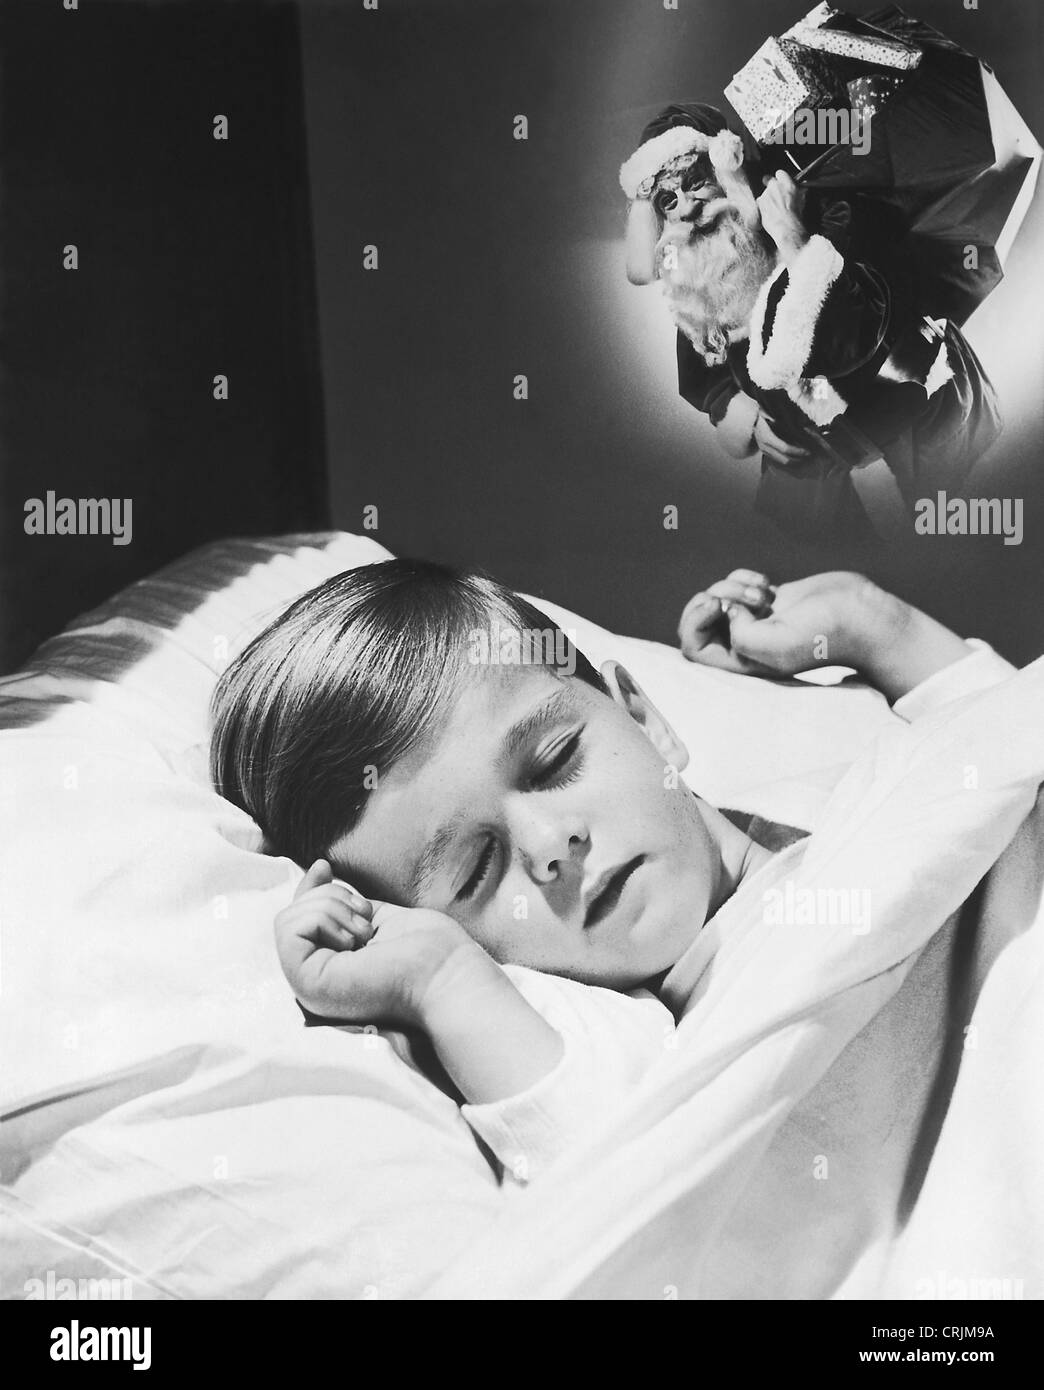 Boy dreaming of Santa Claus Stock Photo - Alamy